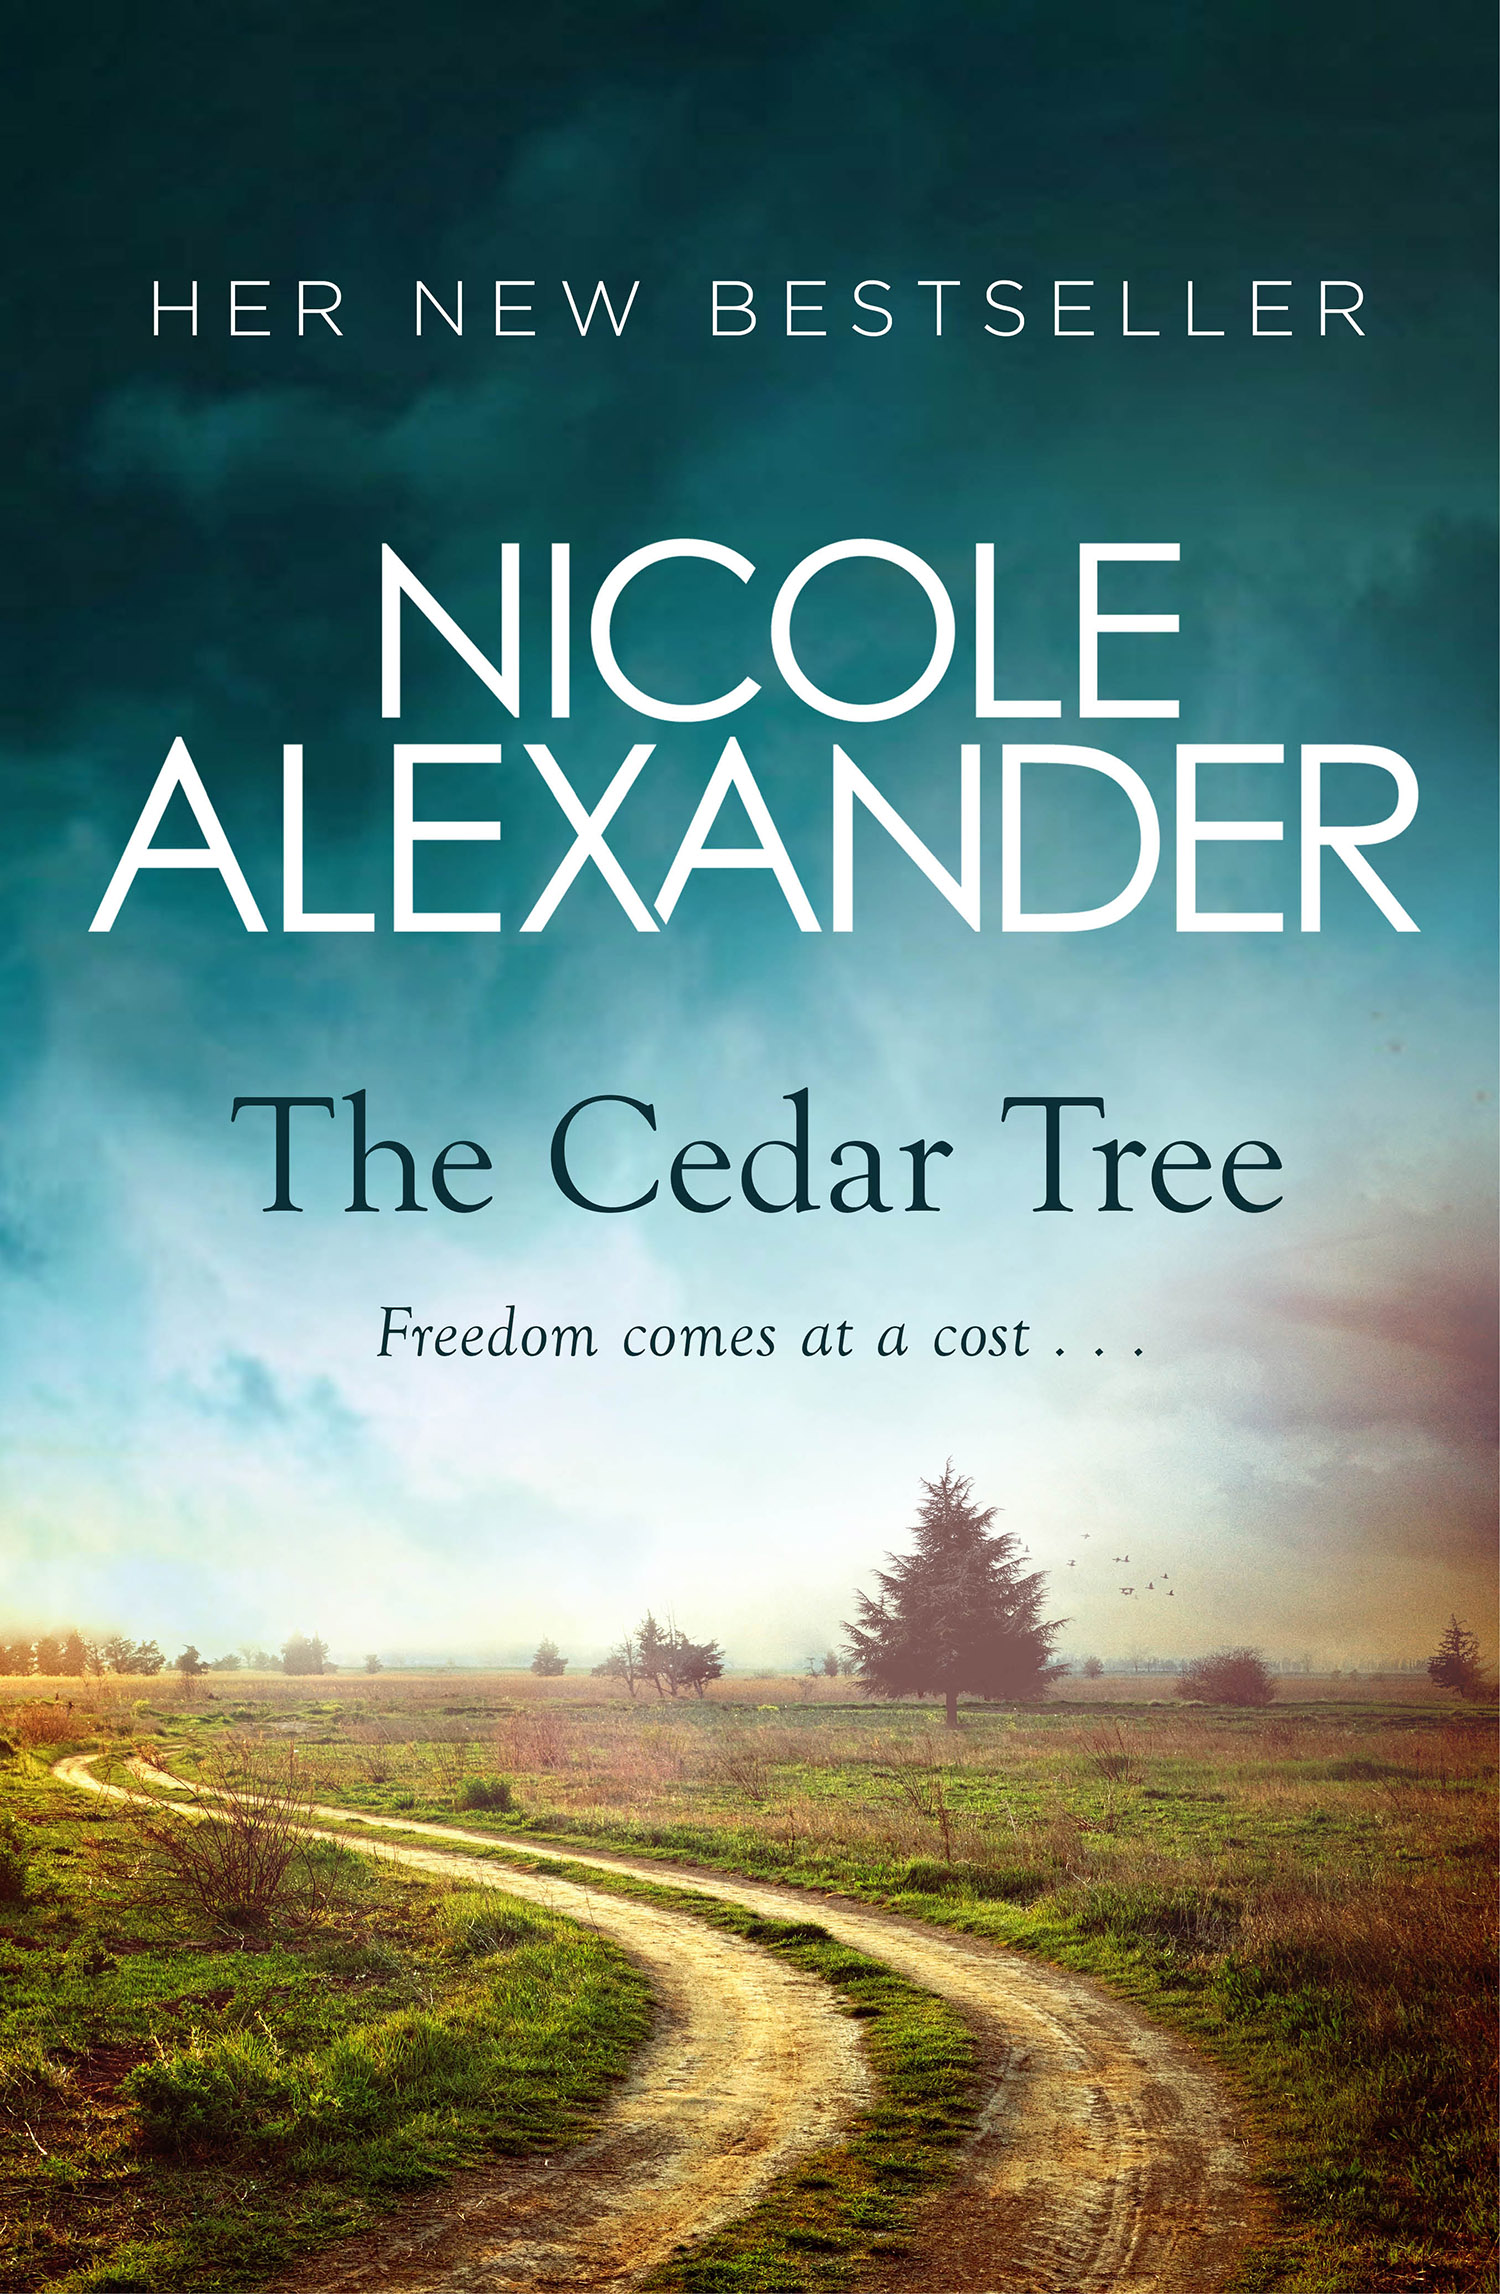 The cedar tree book by Nicole Alexander